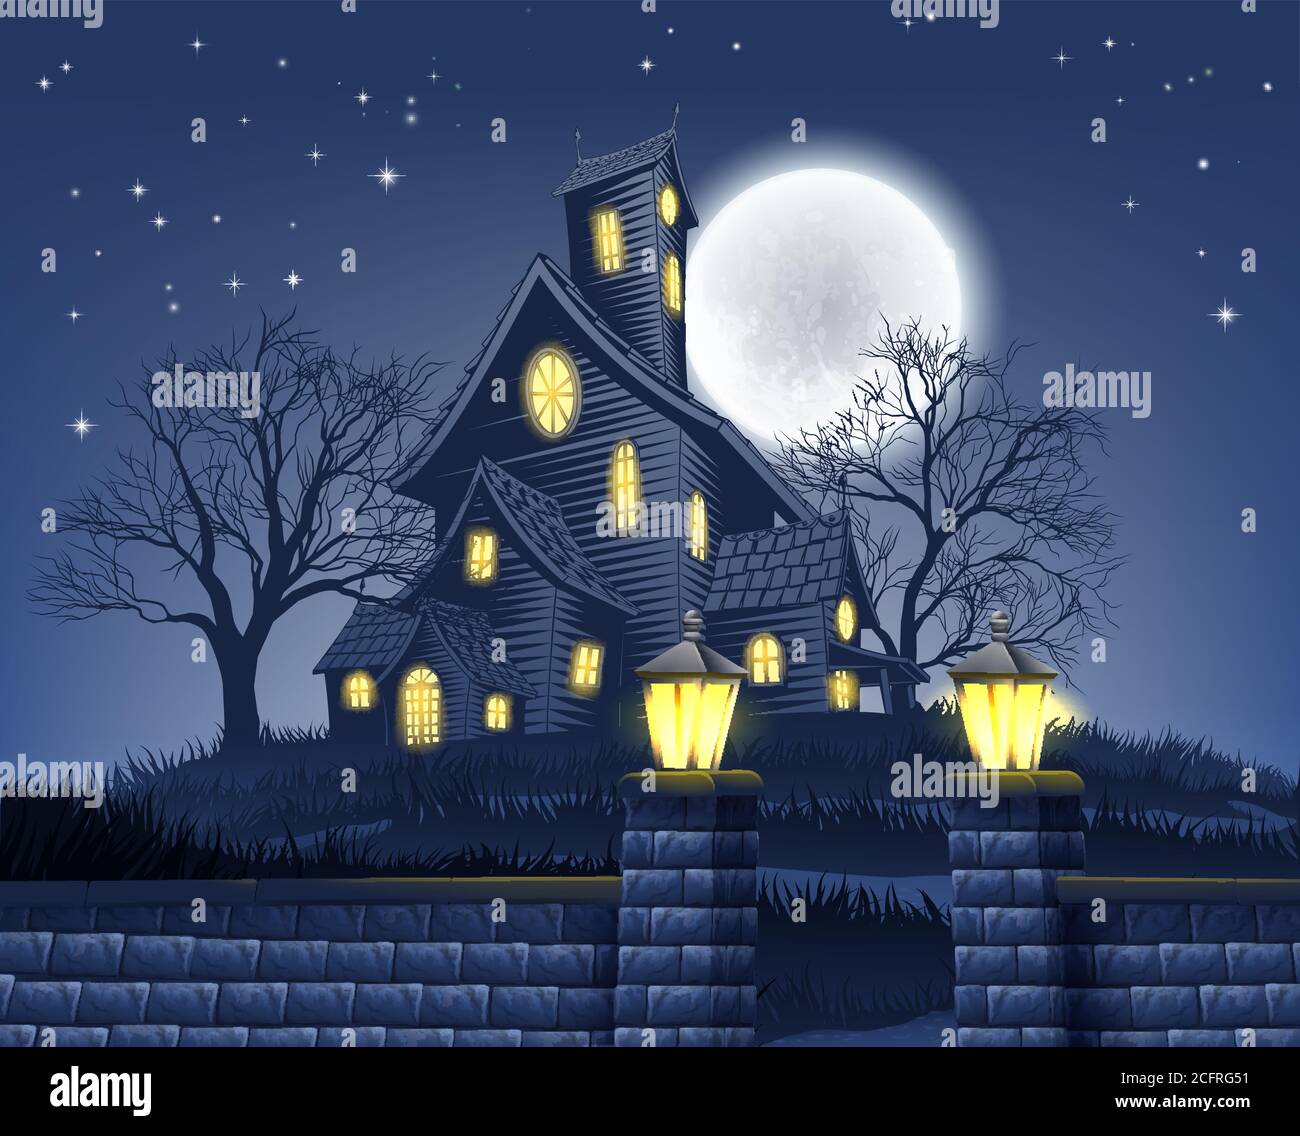 Haunted House Halloween Background Stock Vector